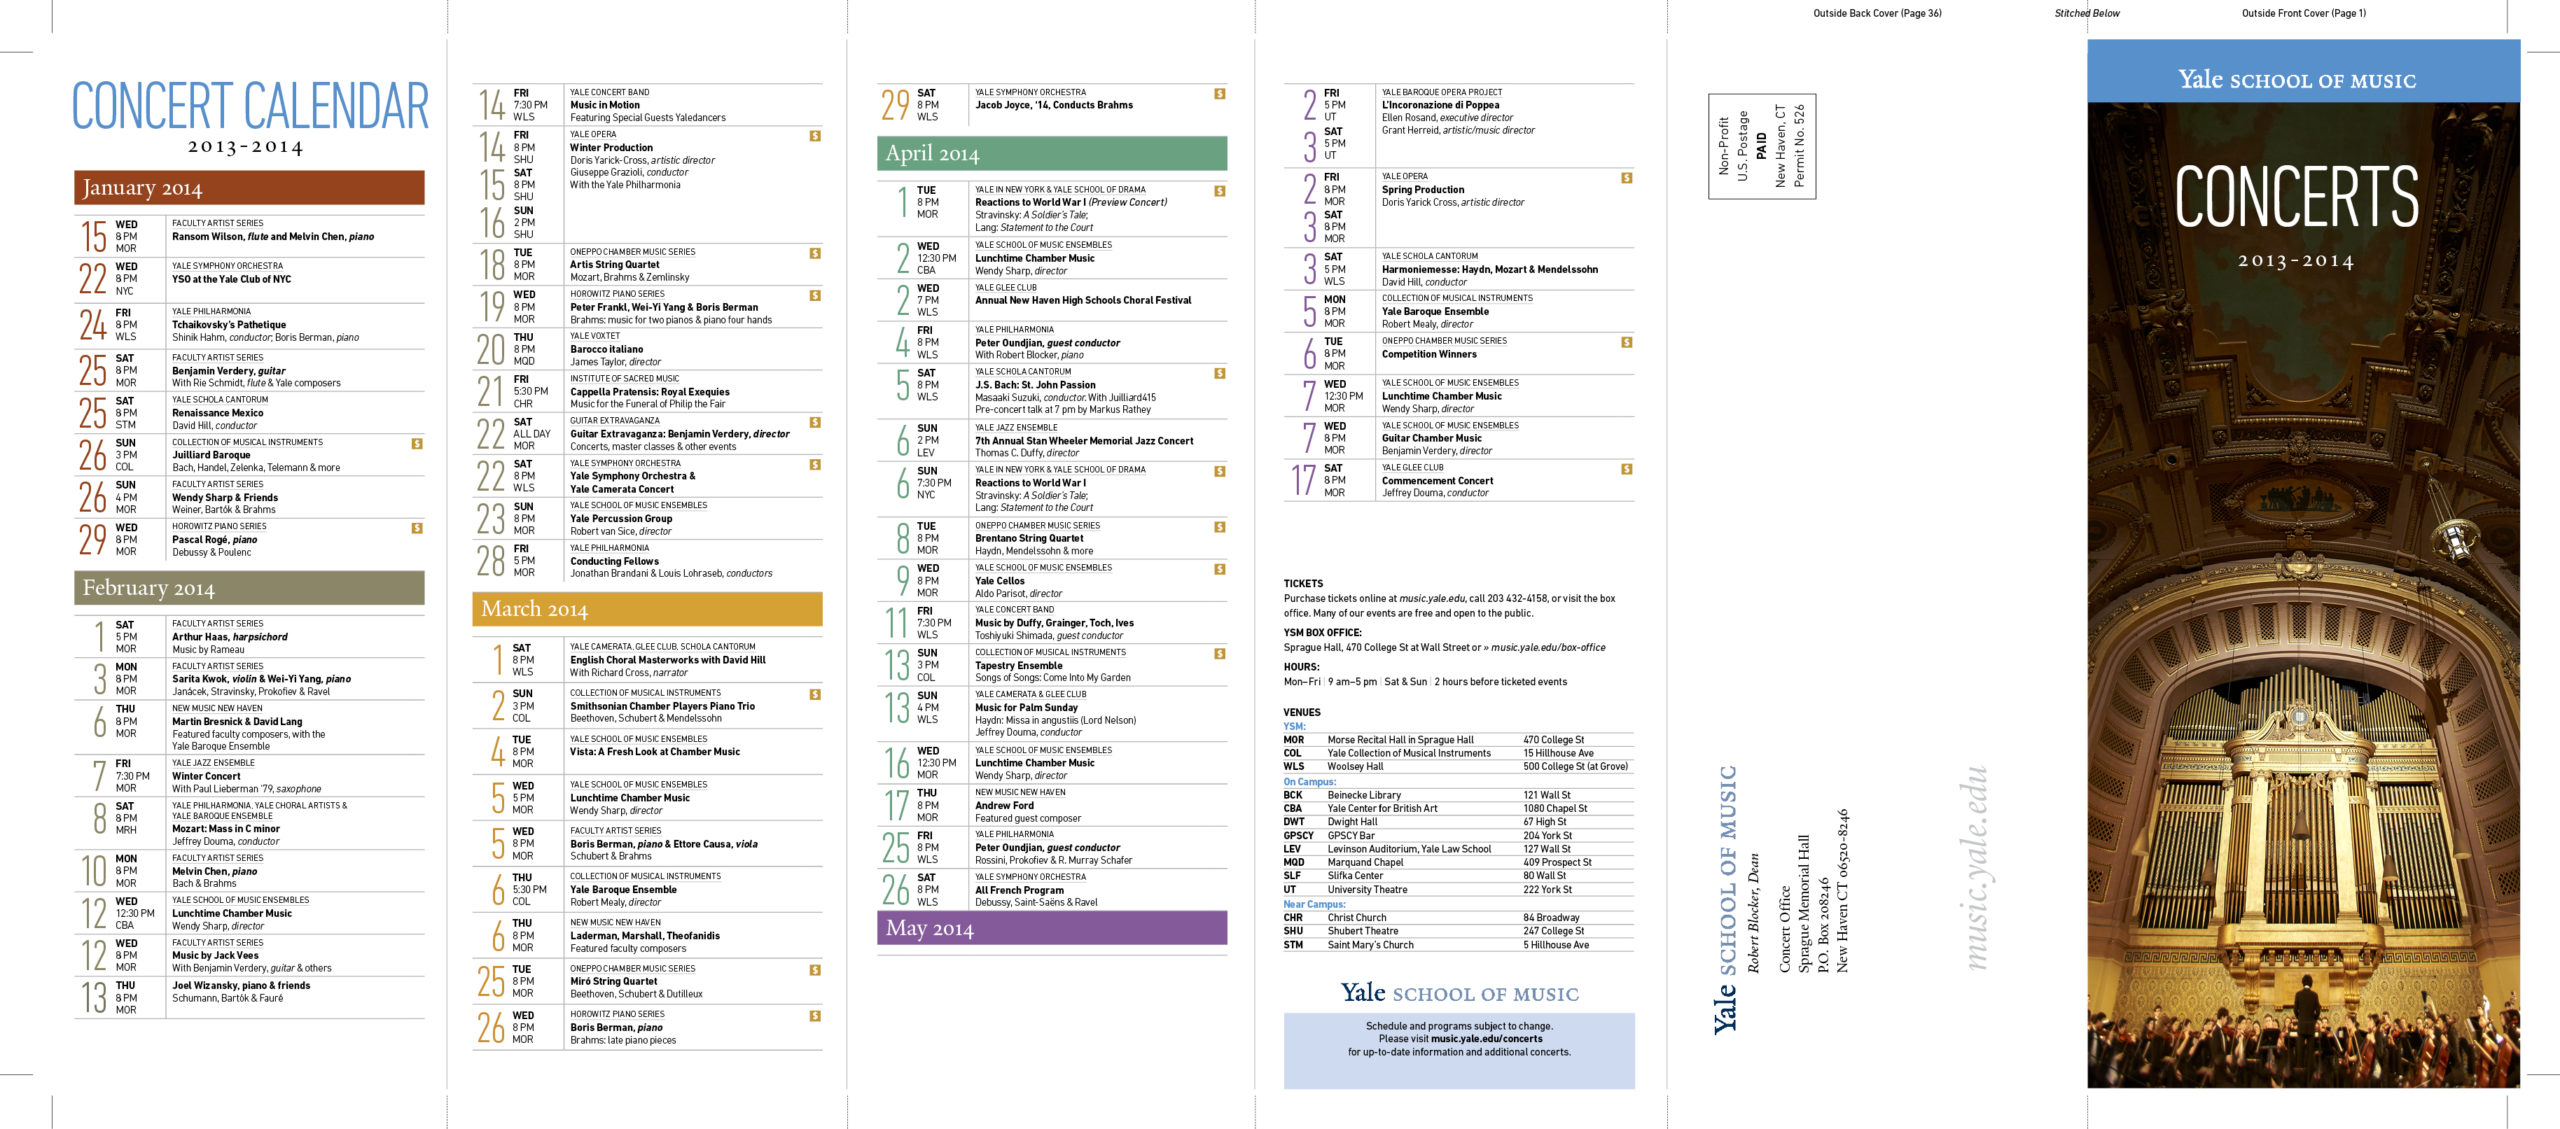 Music at Yale University Season Program / Schedule / Calendar by Granite Bay Graphic Design: 6-Panel Foldout